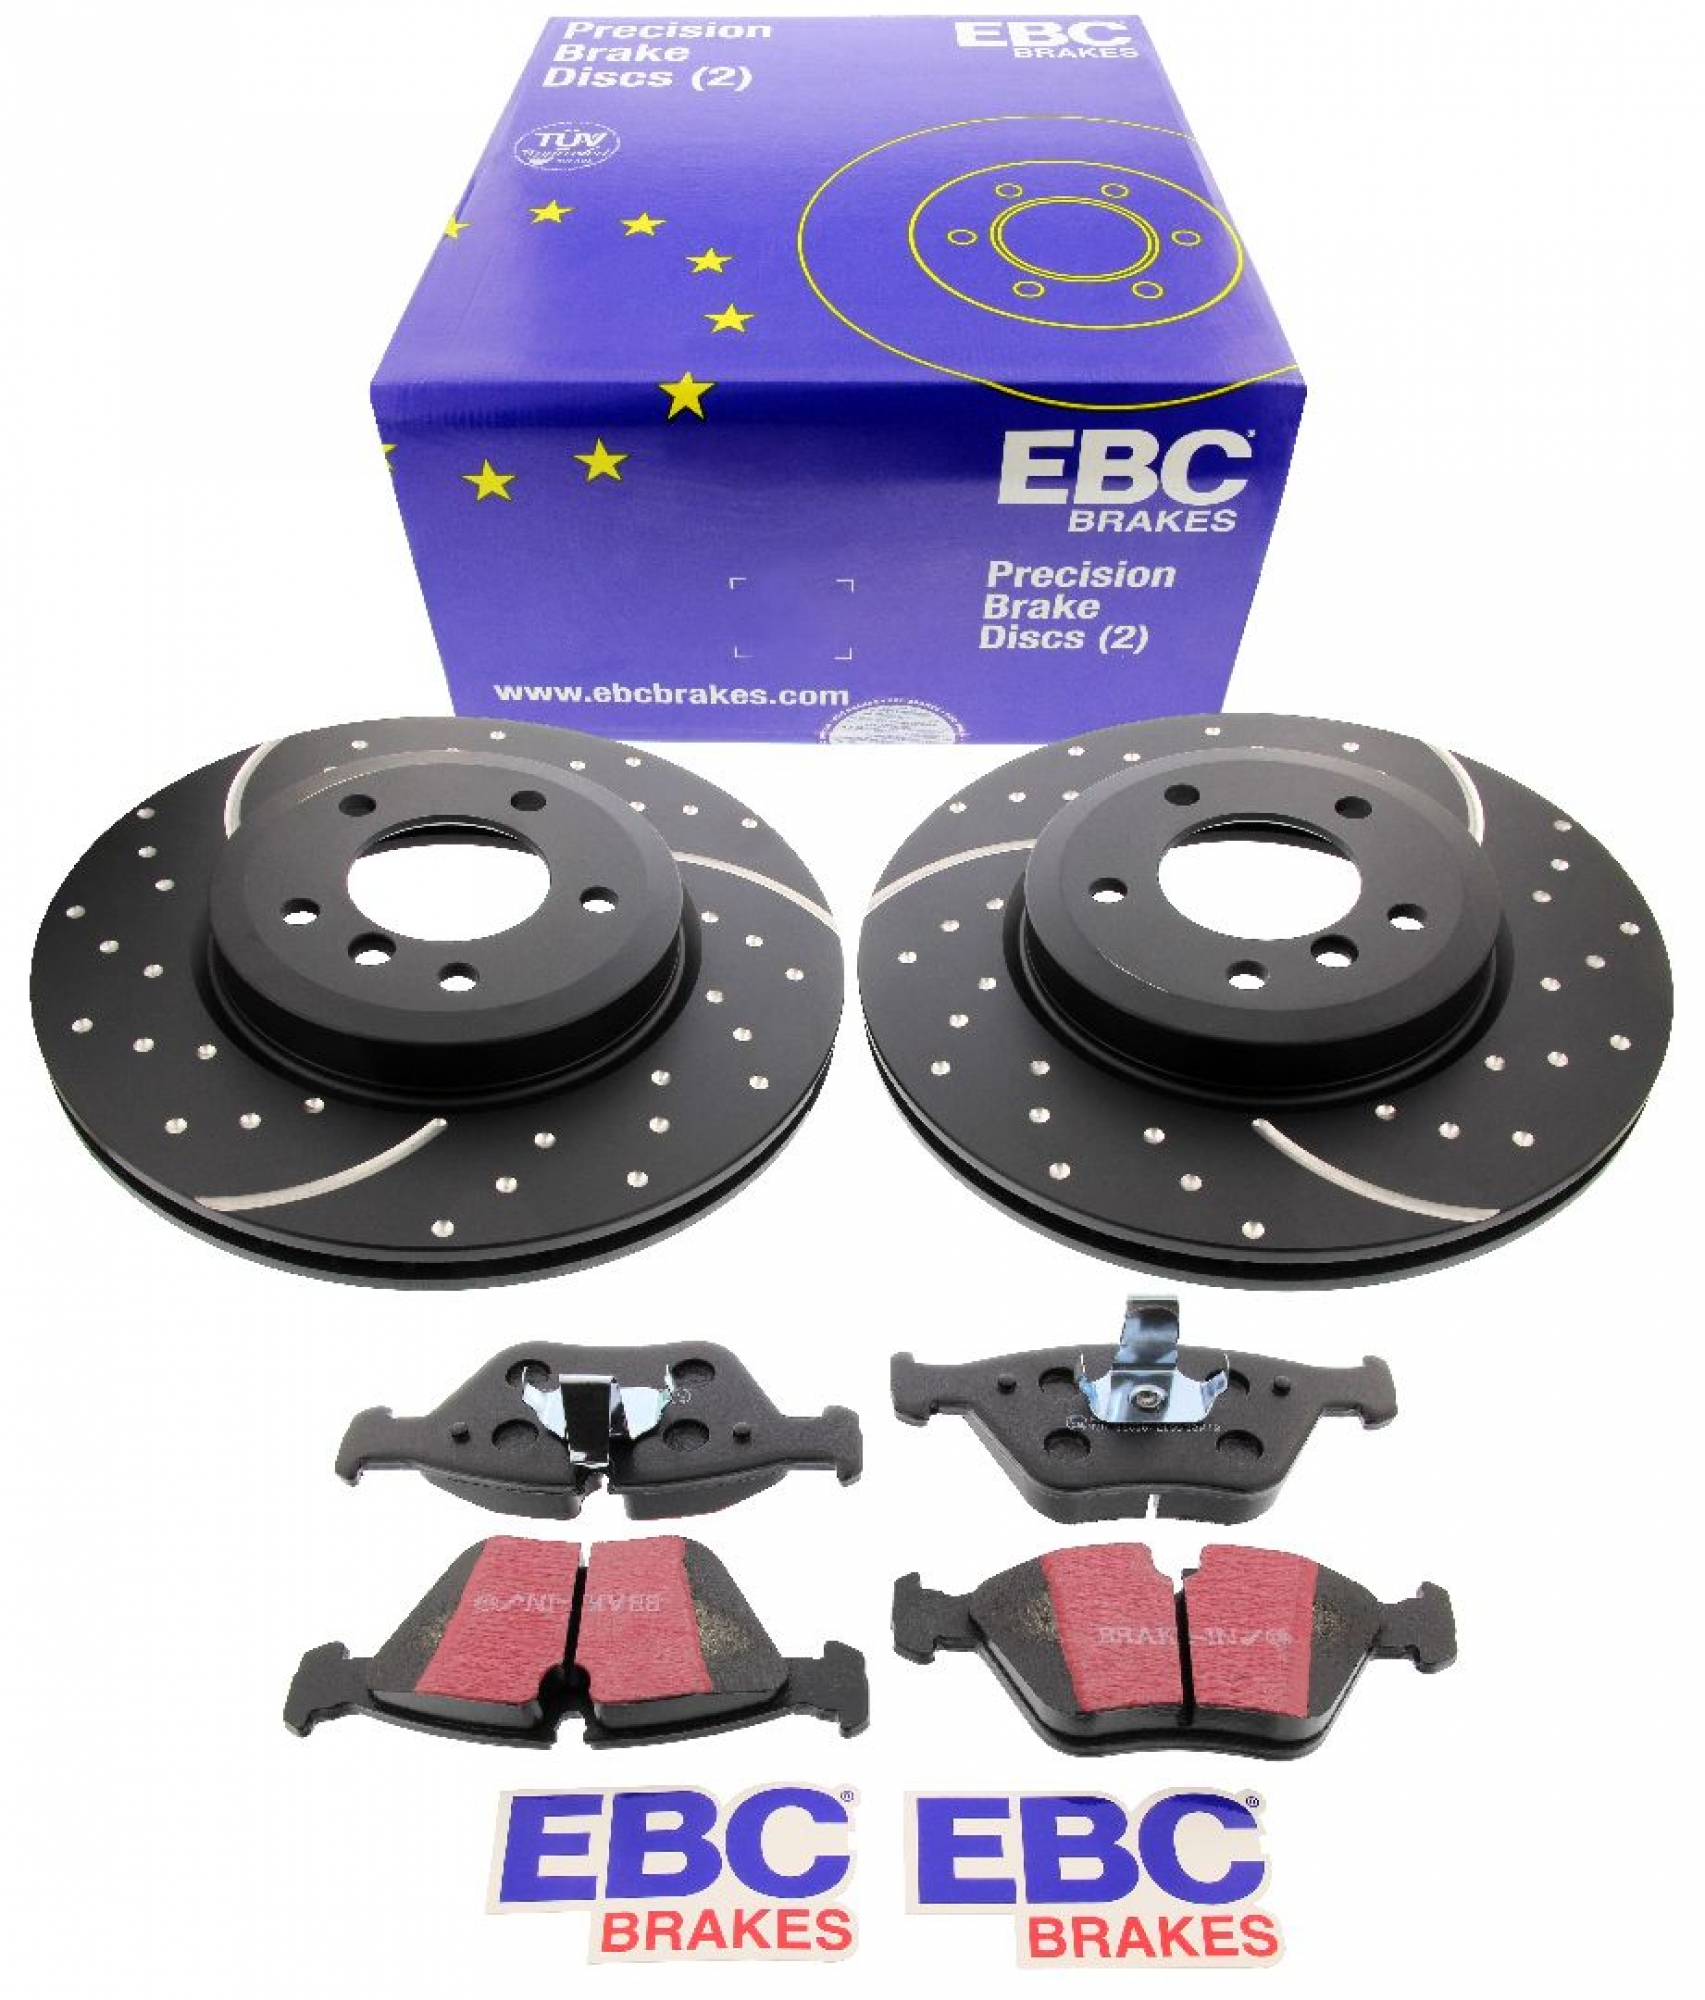 EBC-Bremsensatz, Turbo Groove Disc Black + Bremsbeläge, Blackstuff, Achssatz, VA, BMW Z4, 3